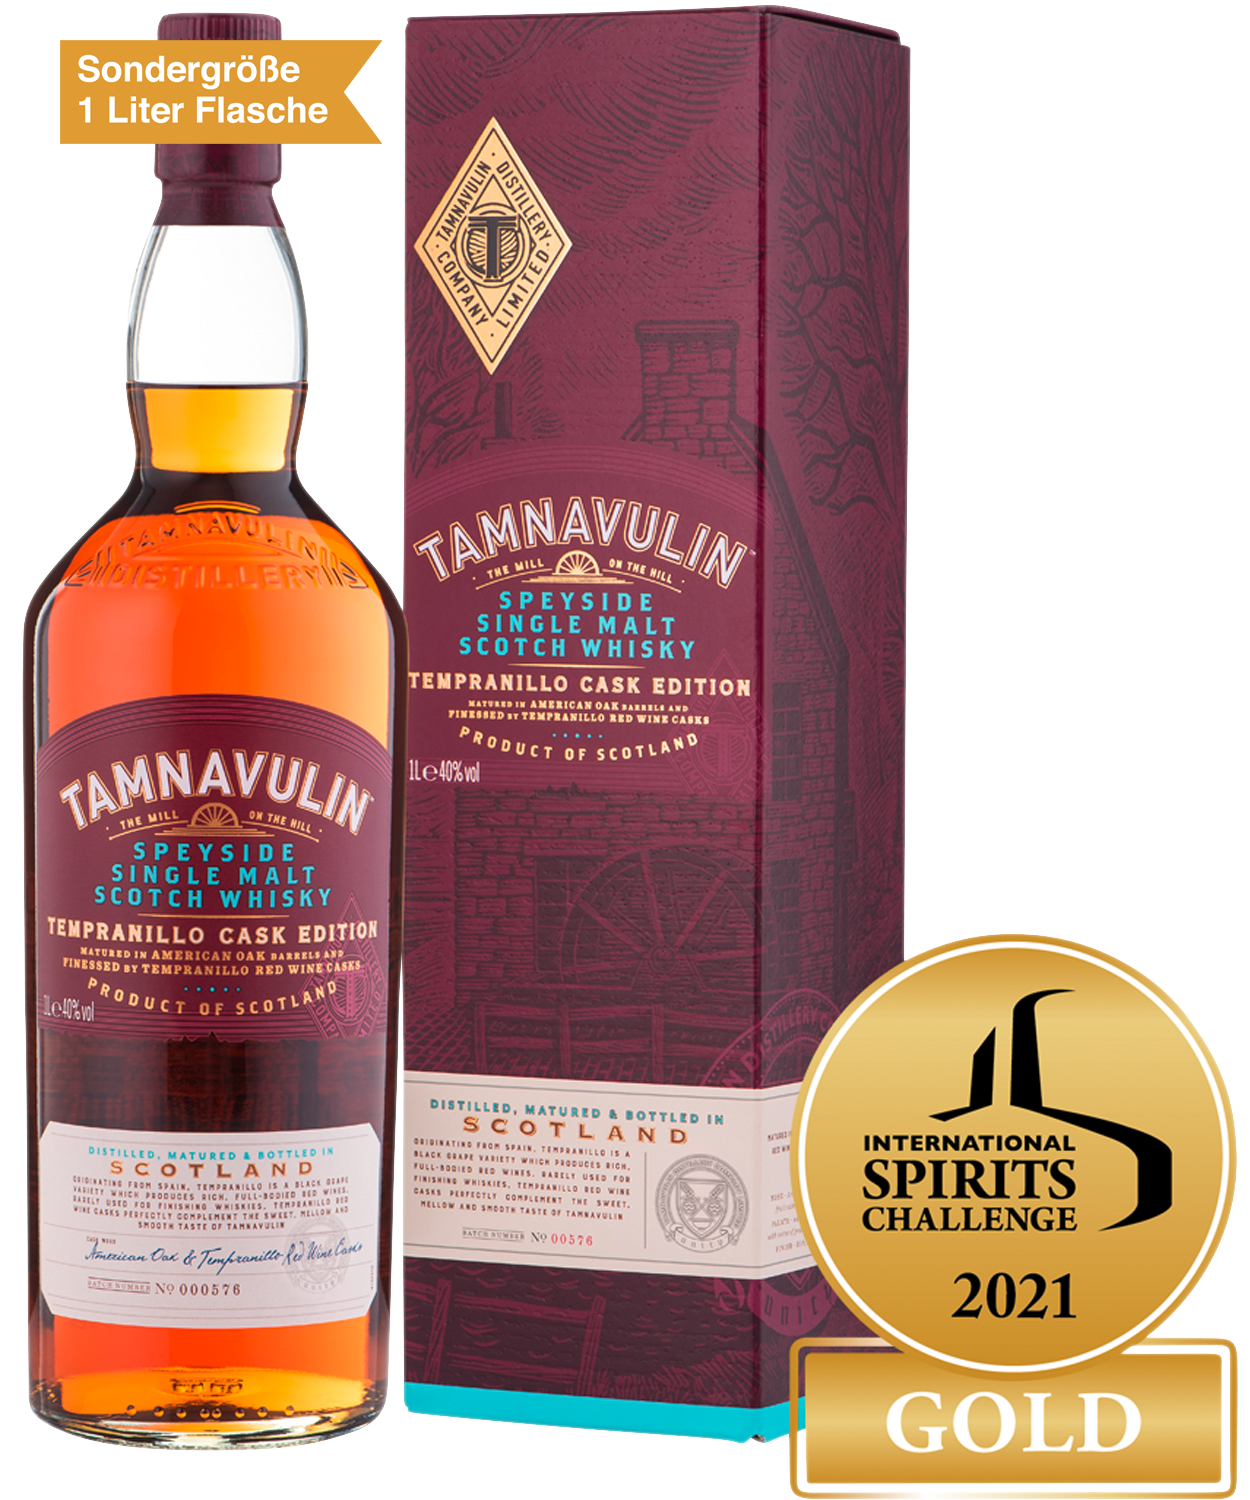 Tamnavulin Speyside Single Malt Scotch Whisky Tempranillo Cask Edition